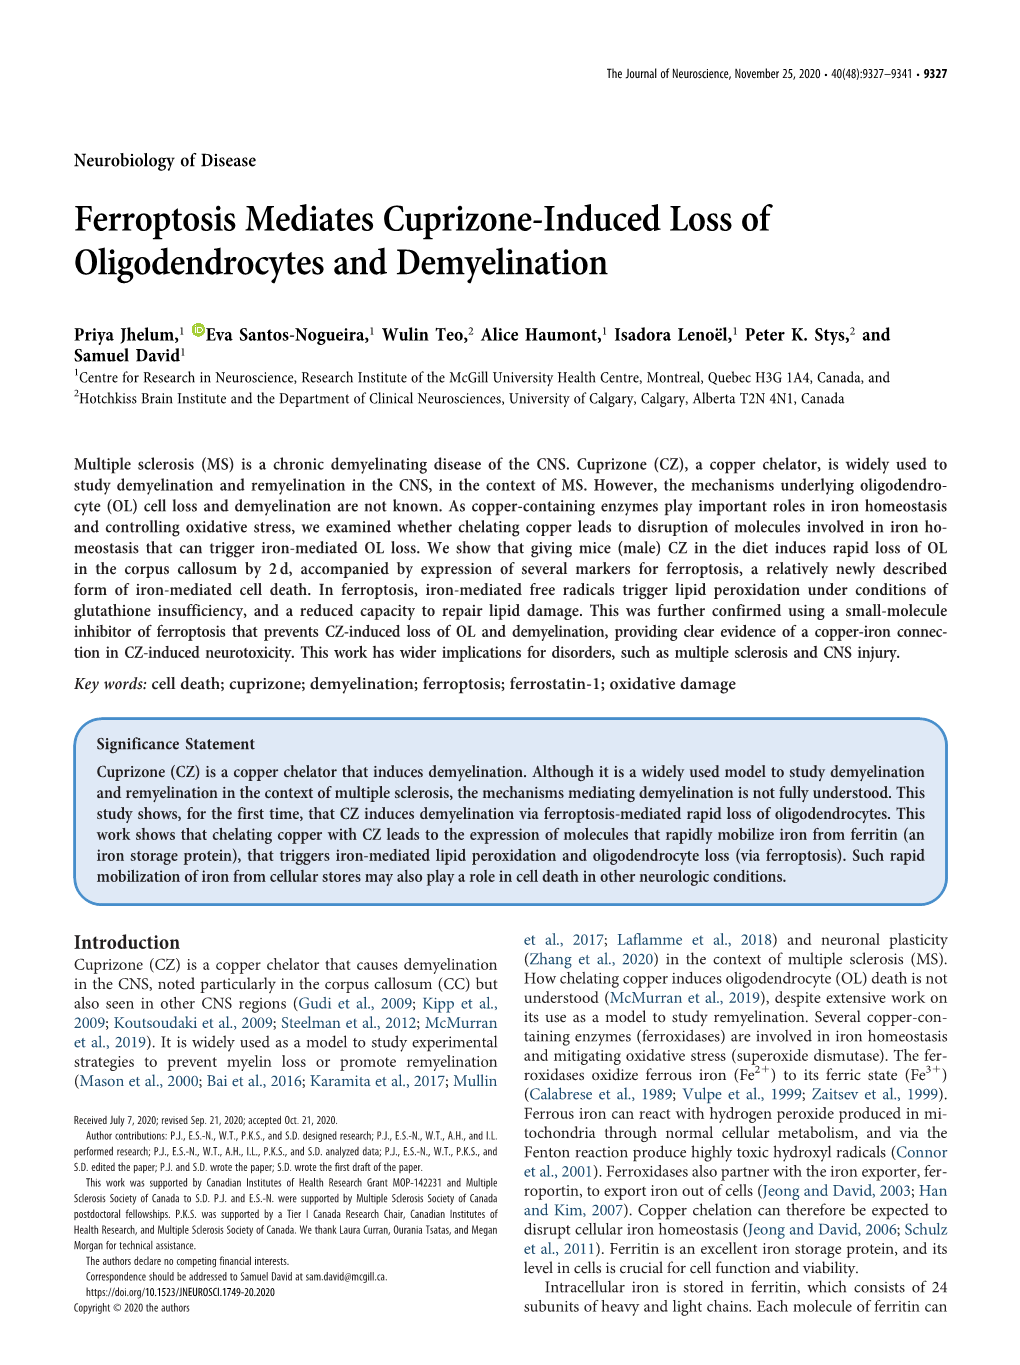 Ferroptosis Mediates Cuprizone-Induced Loss of Oligodendrocytes and Demyelination